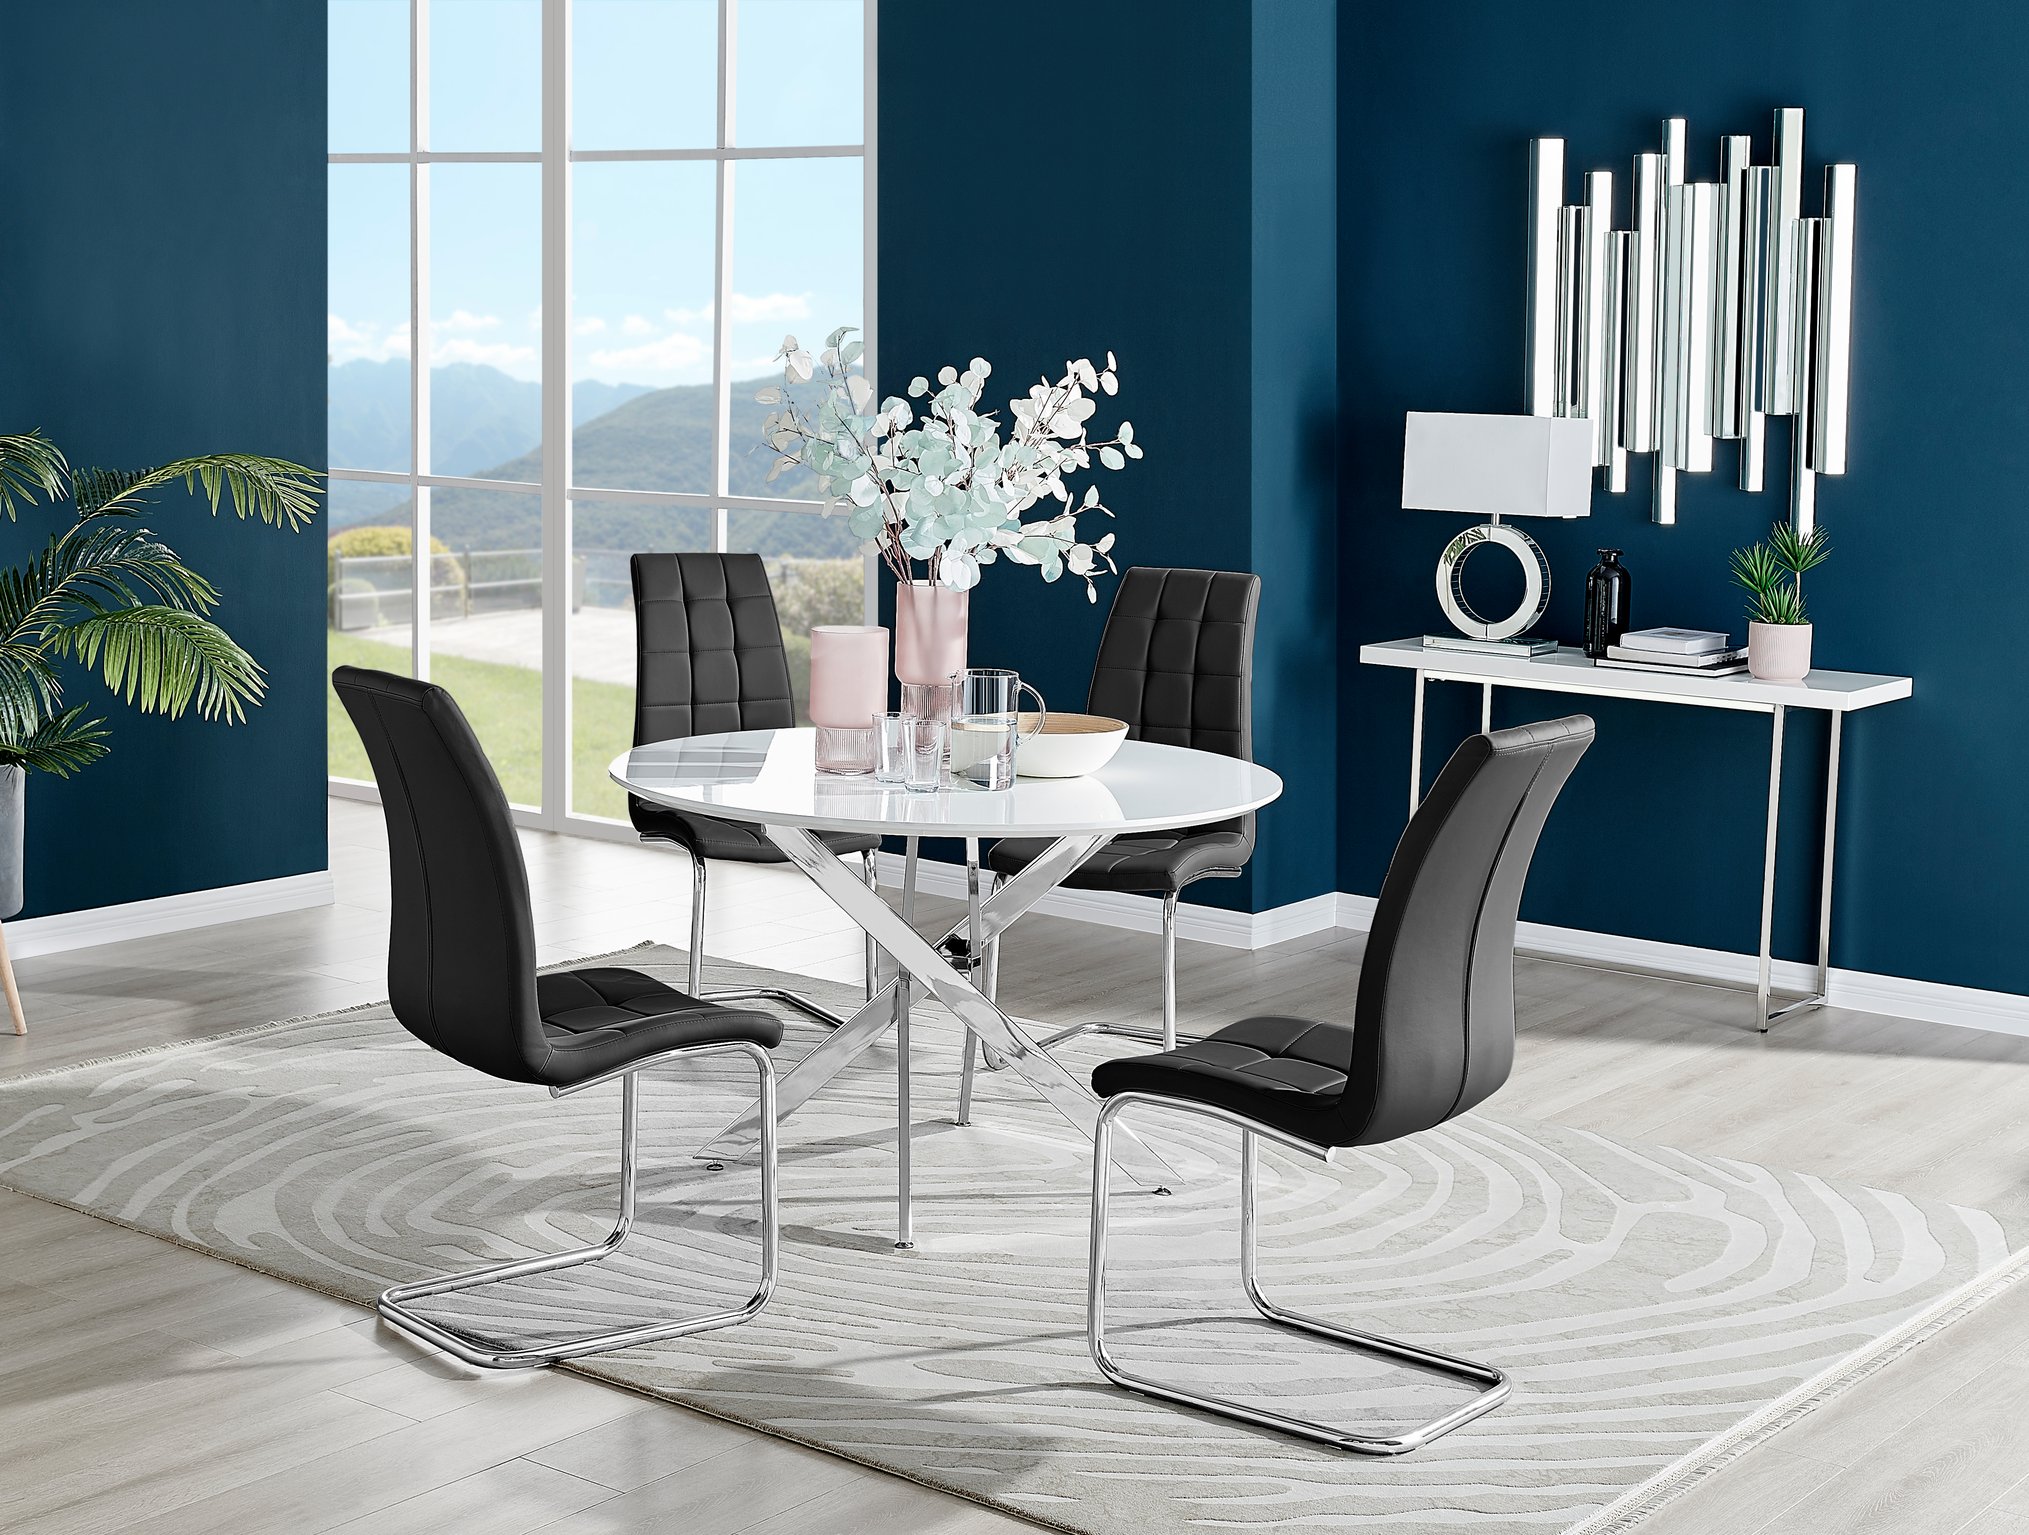 Novara White High Gloss Round Dining Table 120cm & 4 Murano Chairs Furniture Set